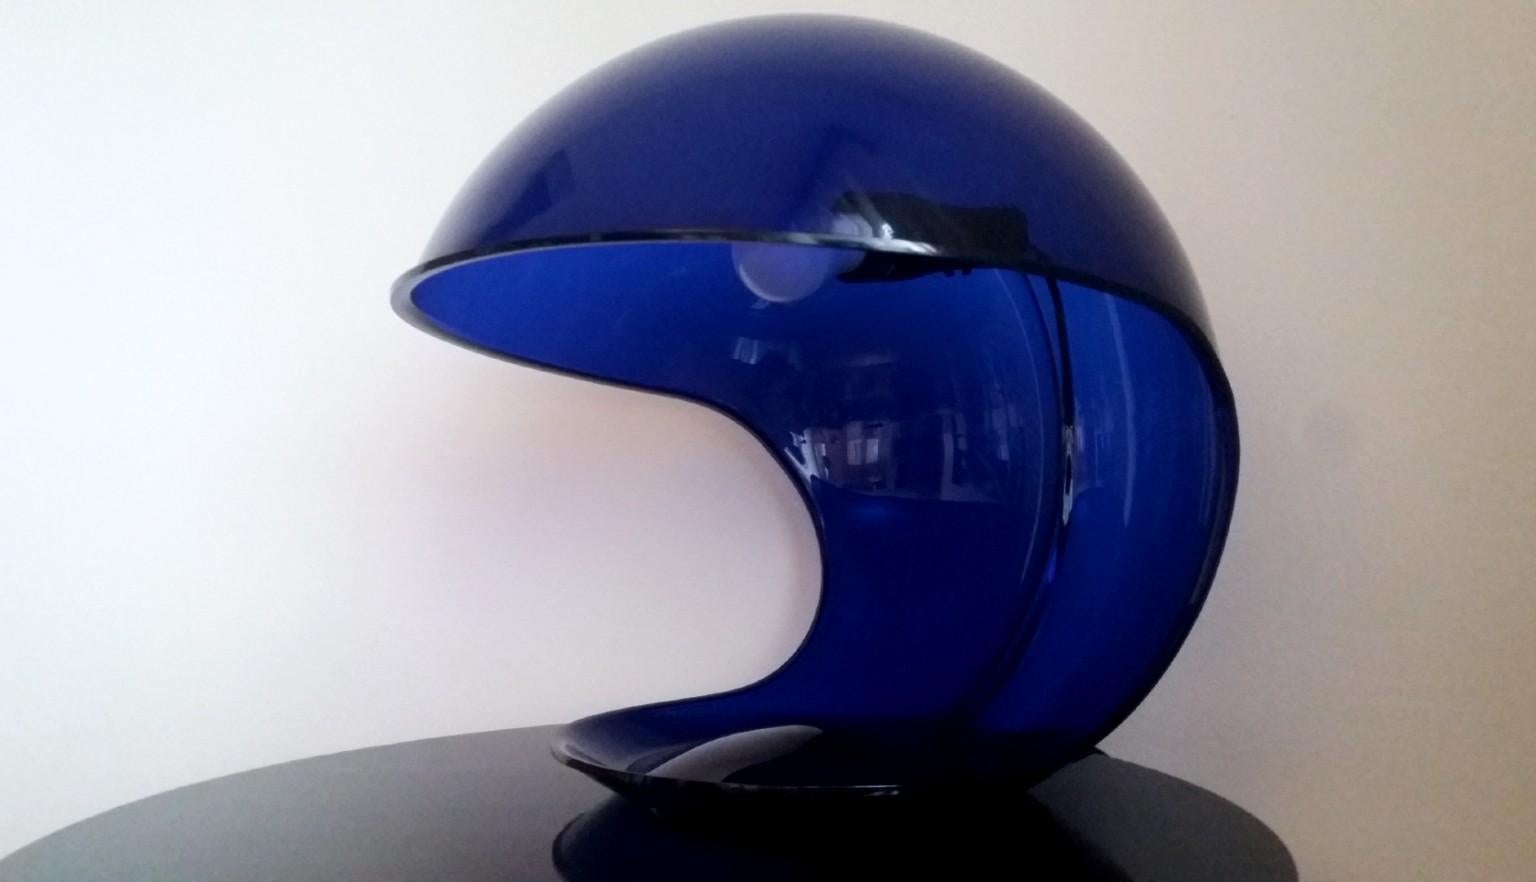 Martinelli Luce, table lamp model 634 or Foglia, in rare blue color transparent methacrylate.
Designed in 1969, Italy. Lamp out of production.
Excellent condition.
Literature: Giuliana Gramigna, “Repertorio del Design Italiano 1950 -2000